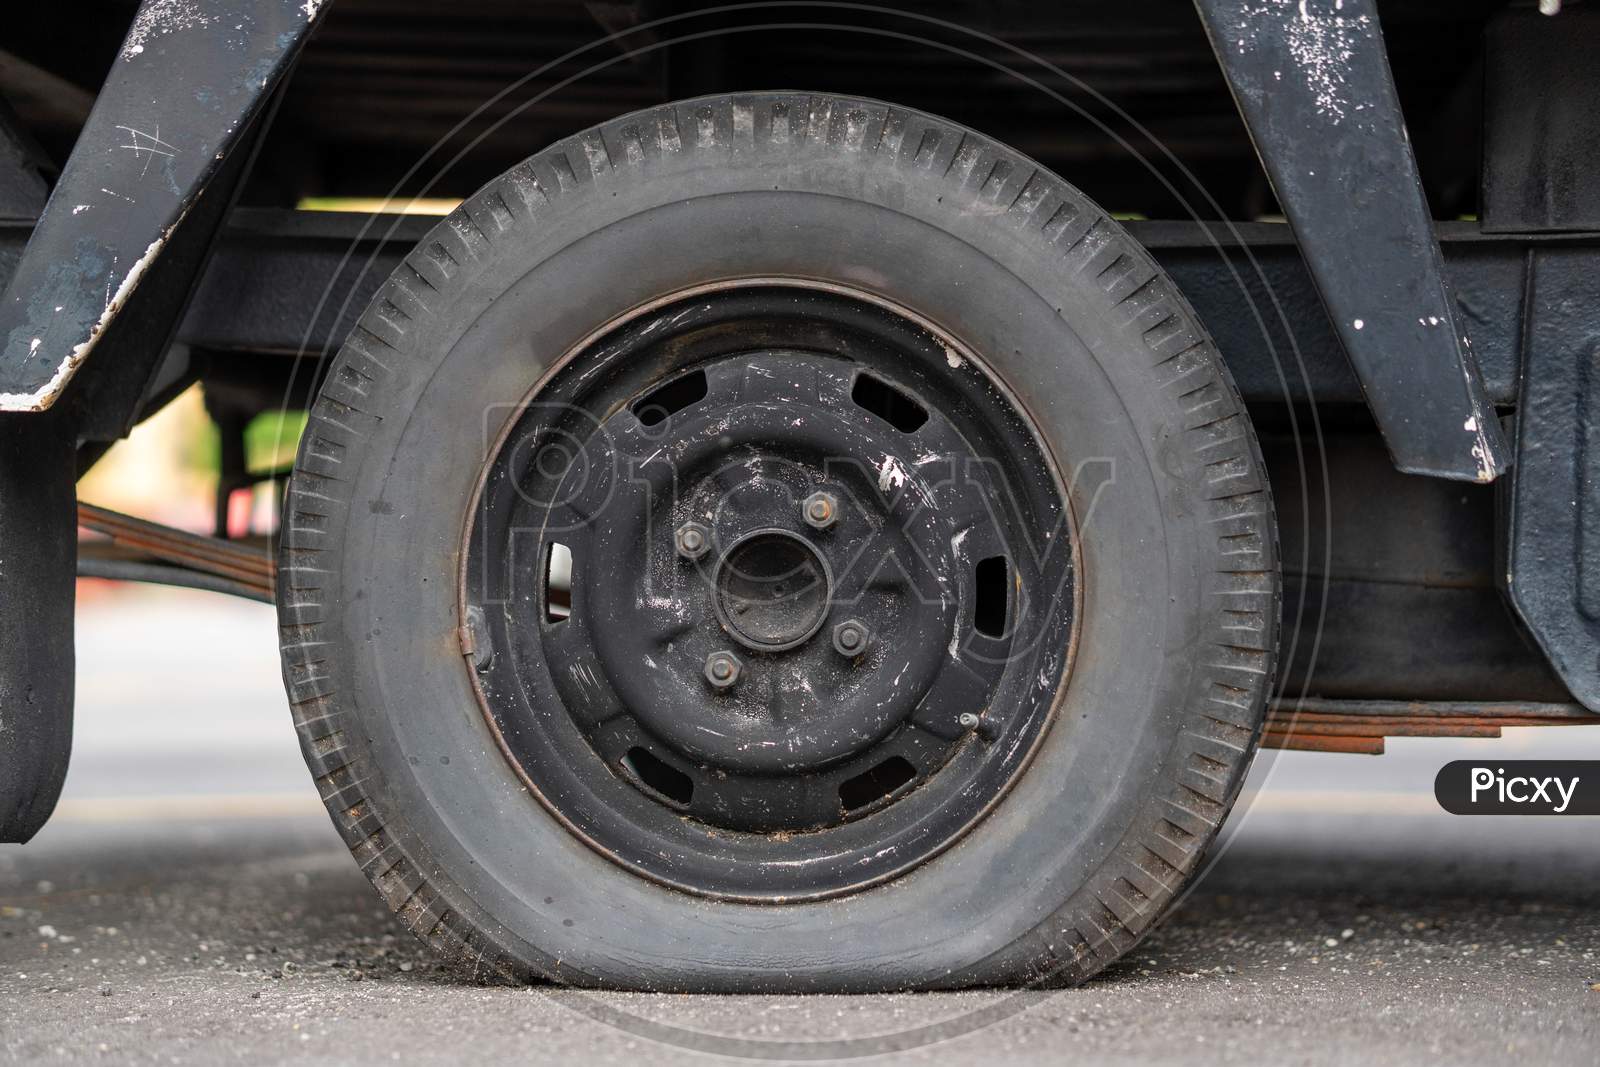 Closeup Shot Of A Van With A Flat tyre